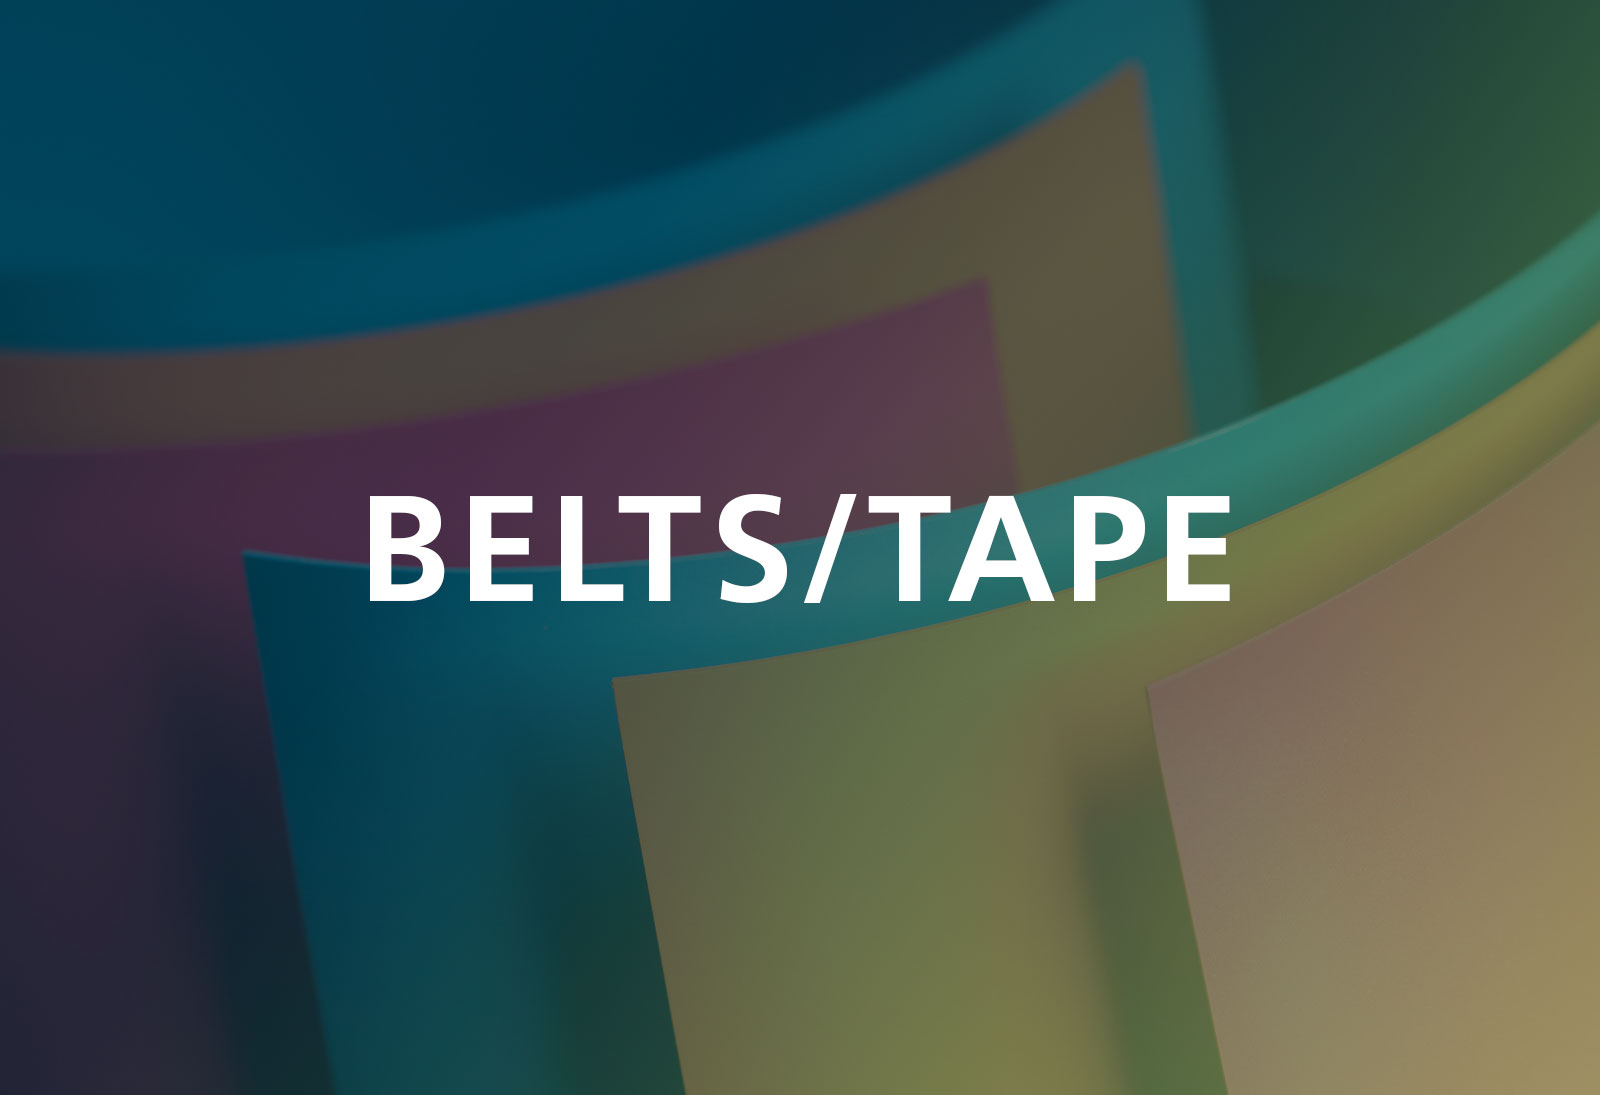 Production of plastic belts/tape